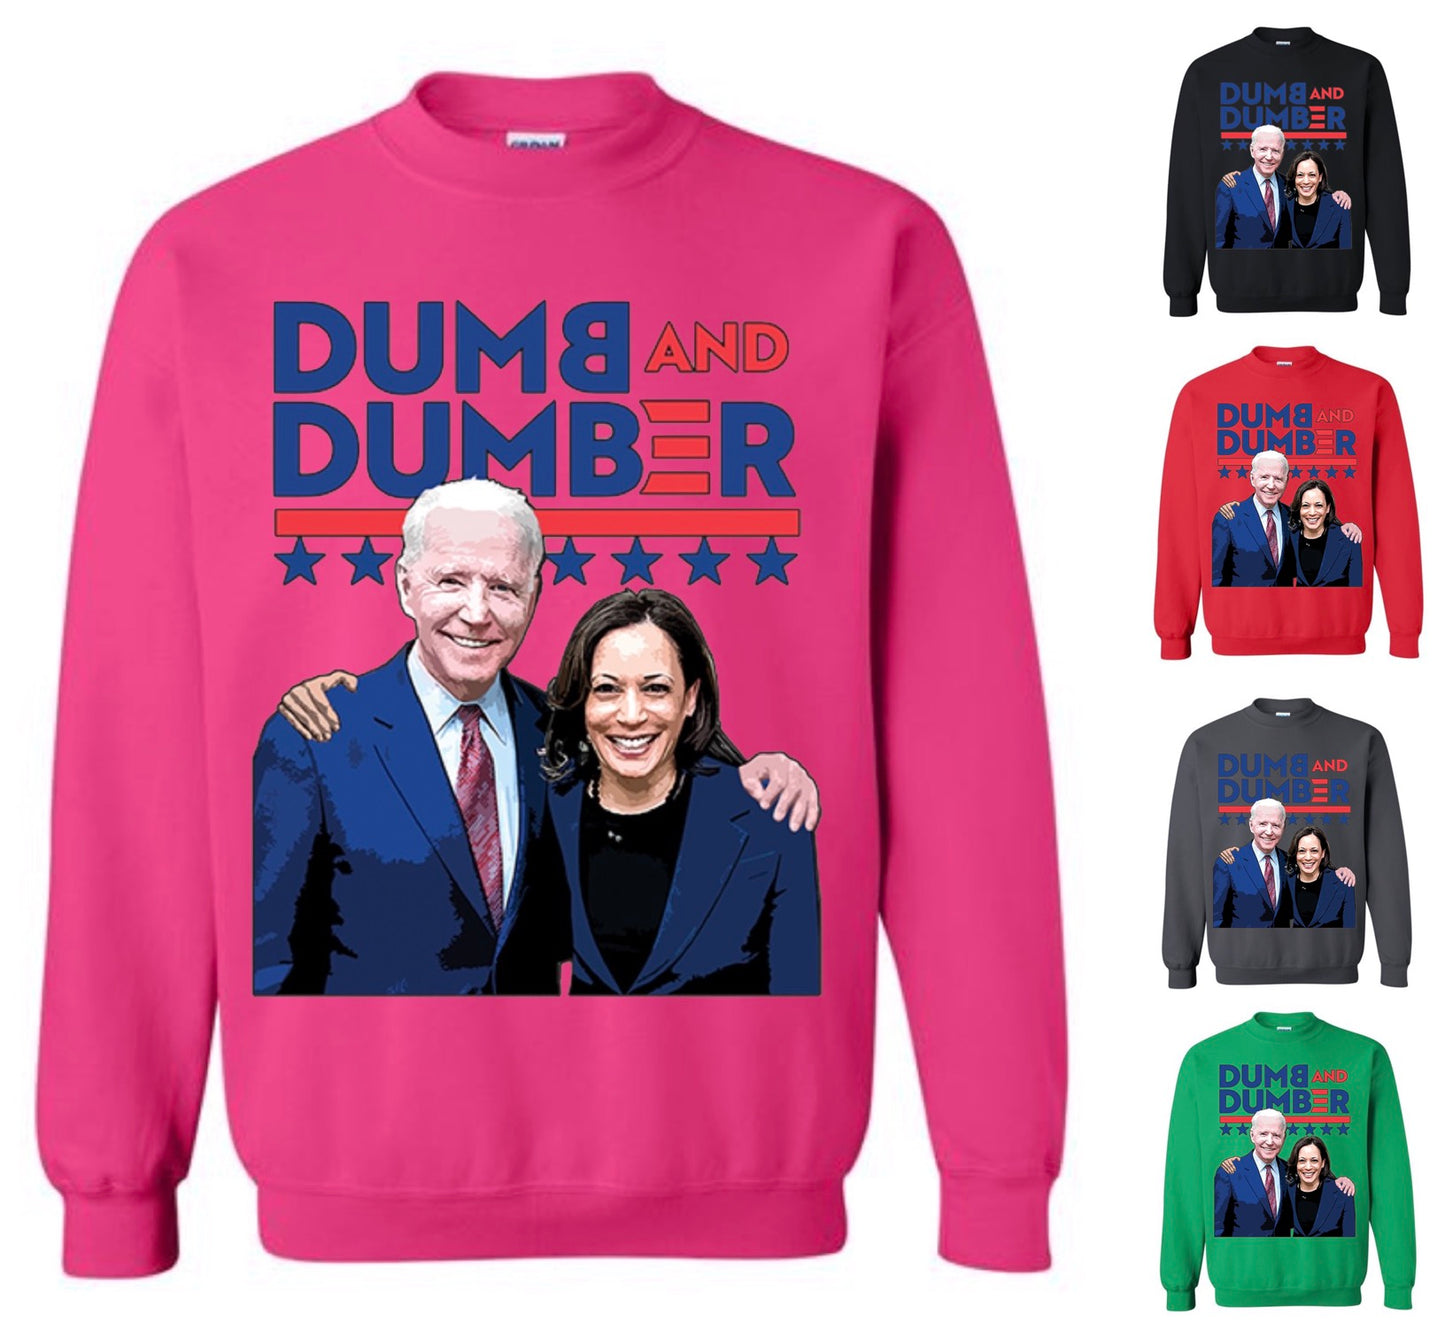 Dumb & Dumber Sweatshirt